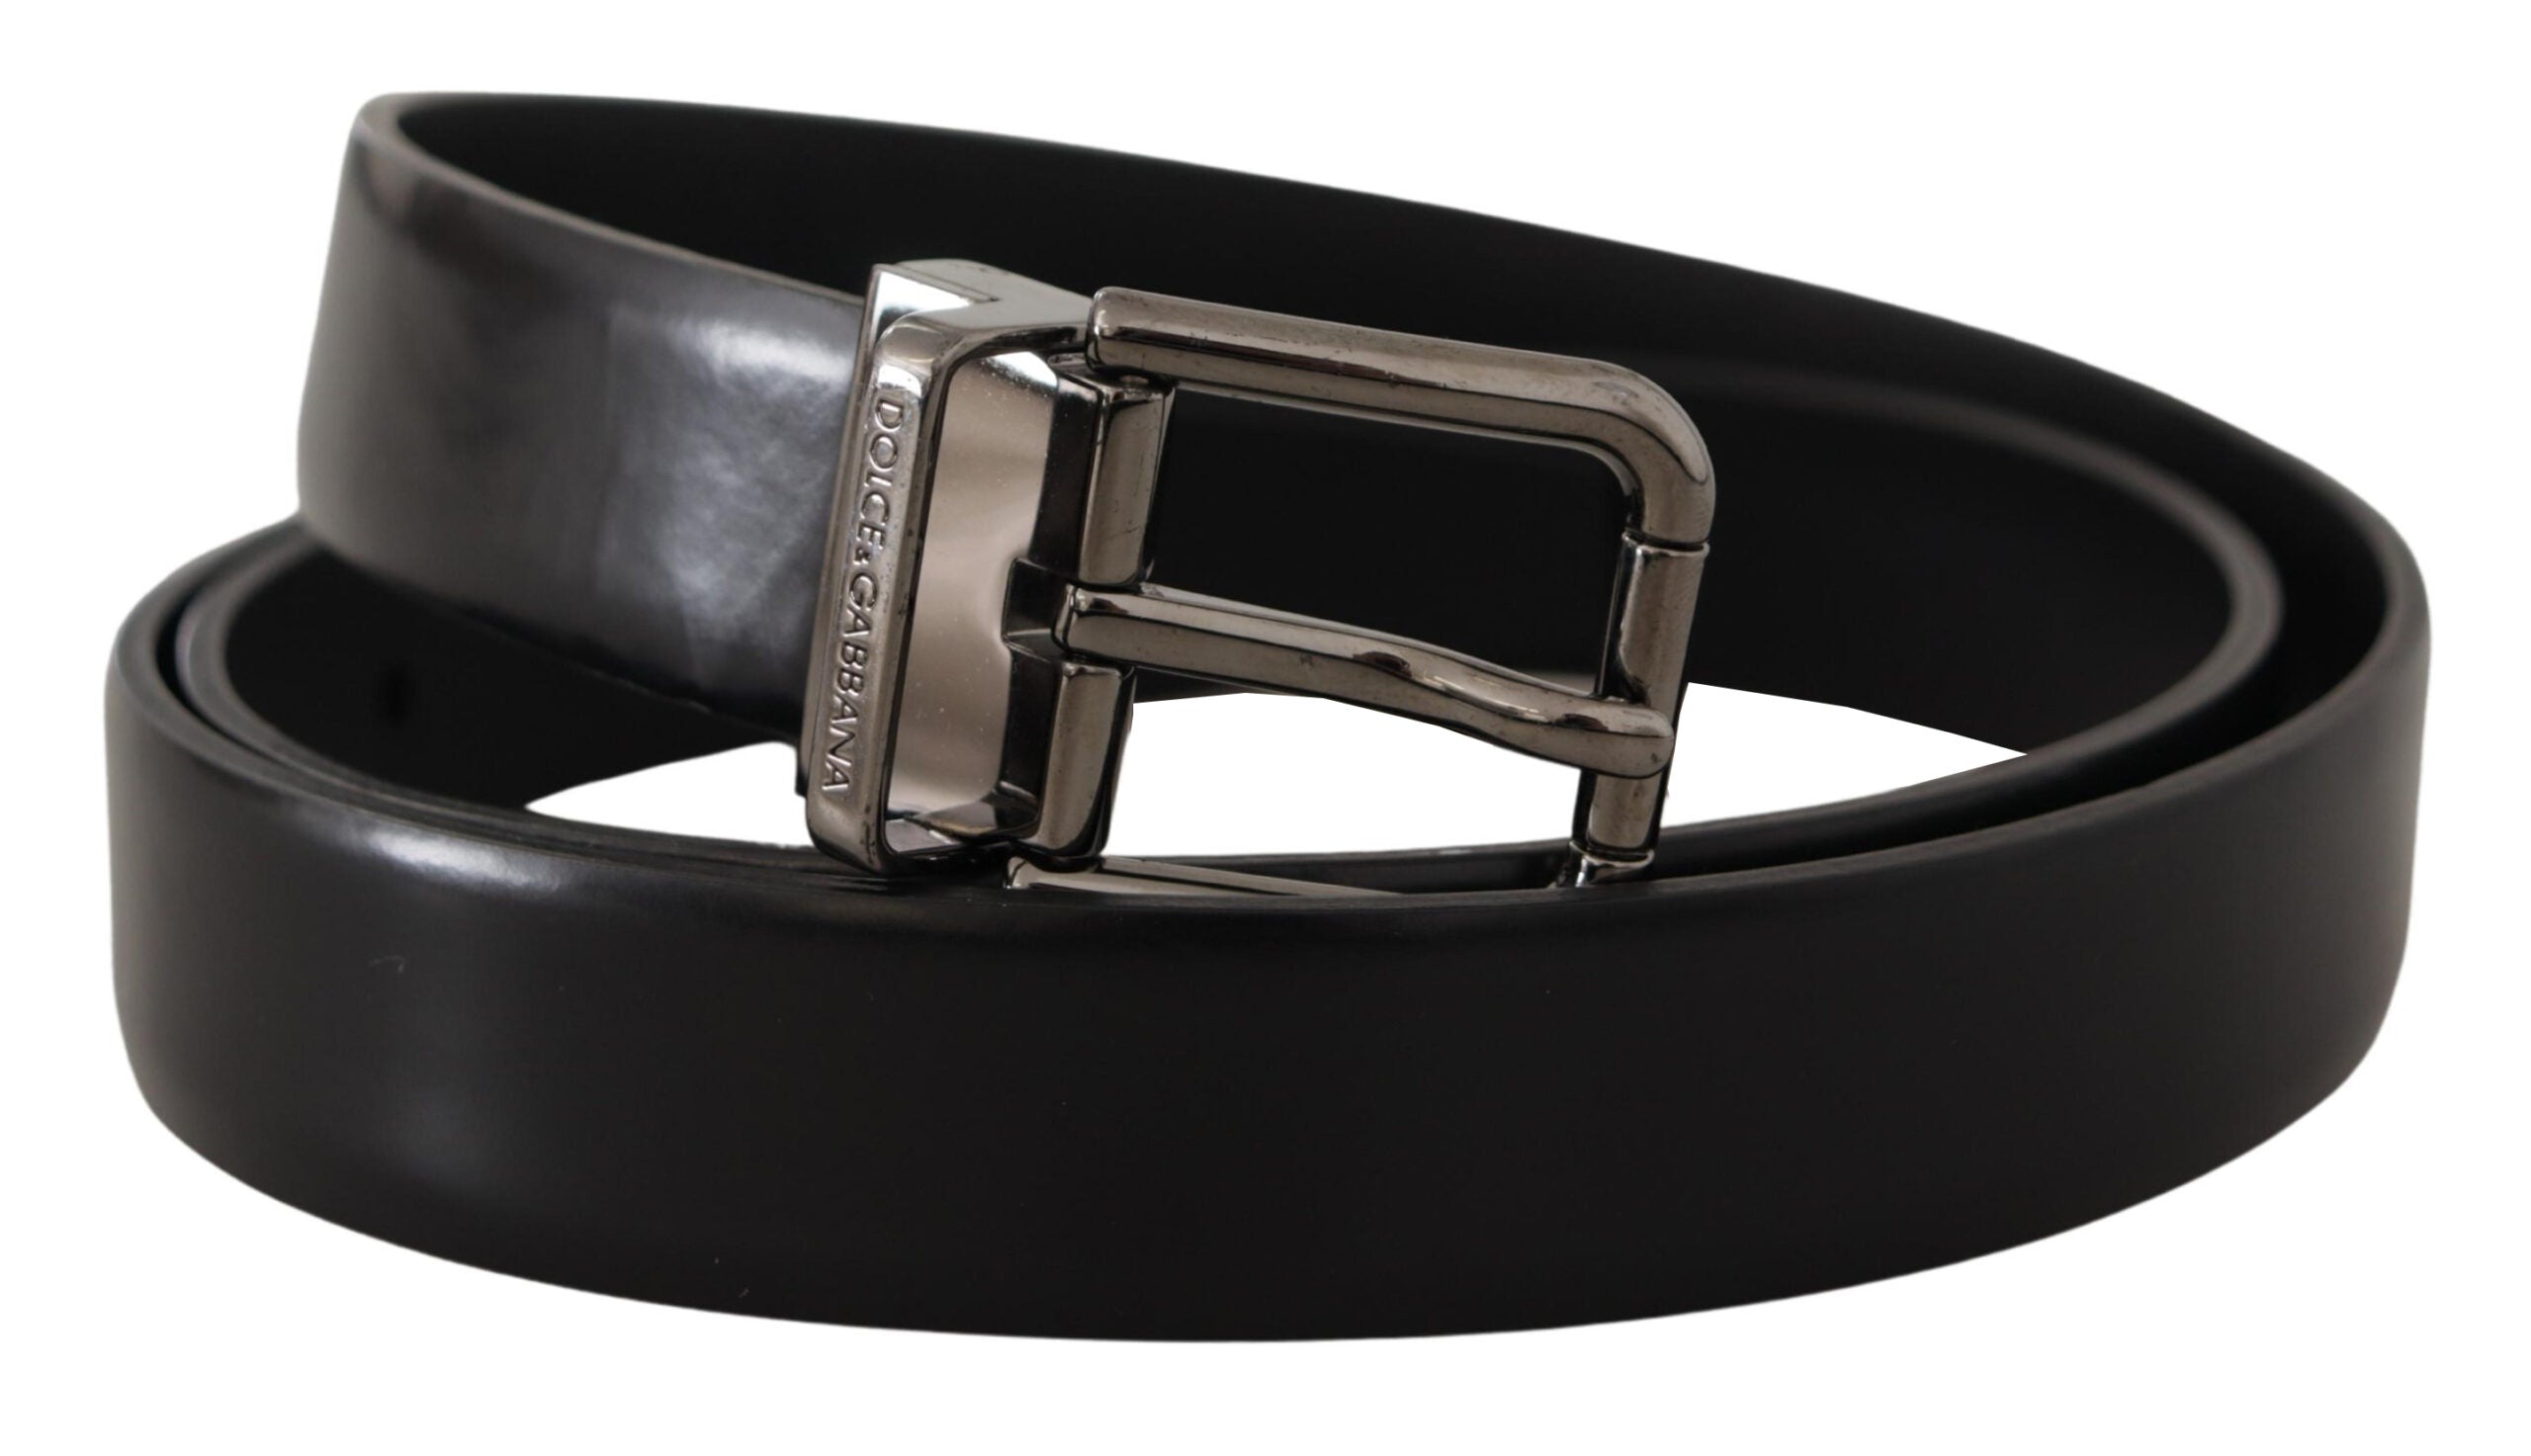 Dolce & Gabbana Sleek Black Leather Belt with Metallic Buckle